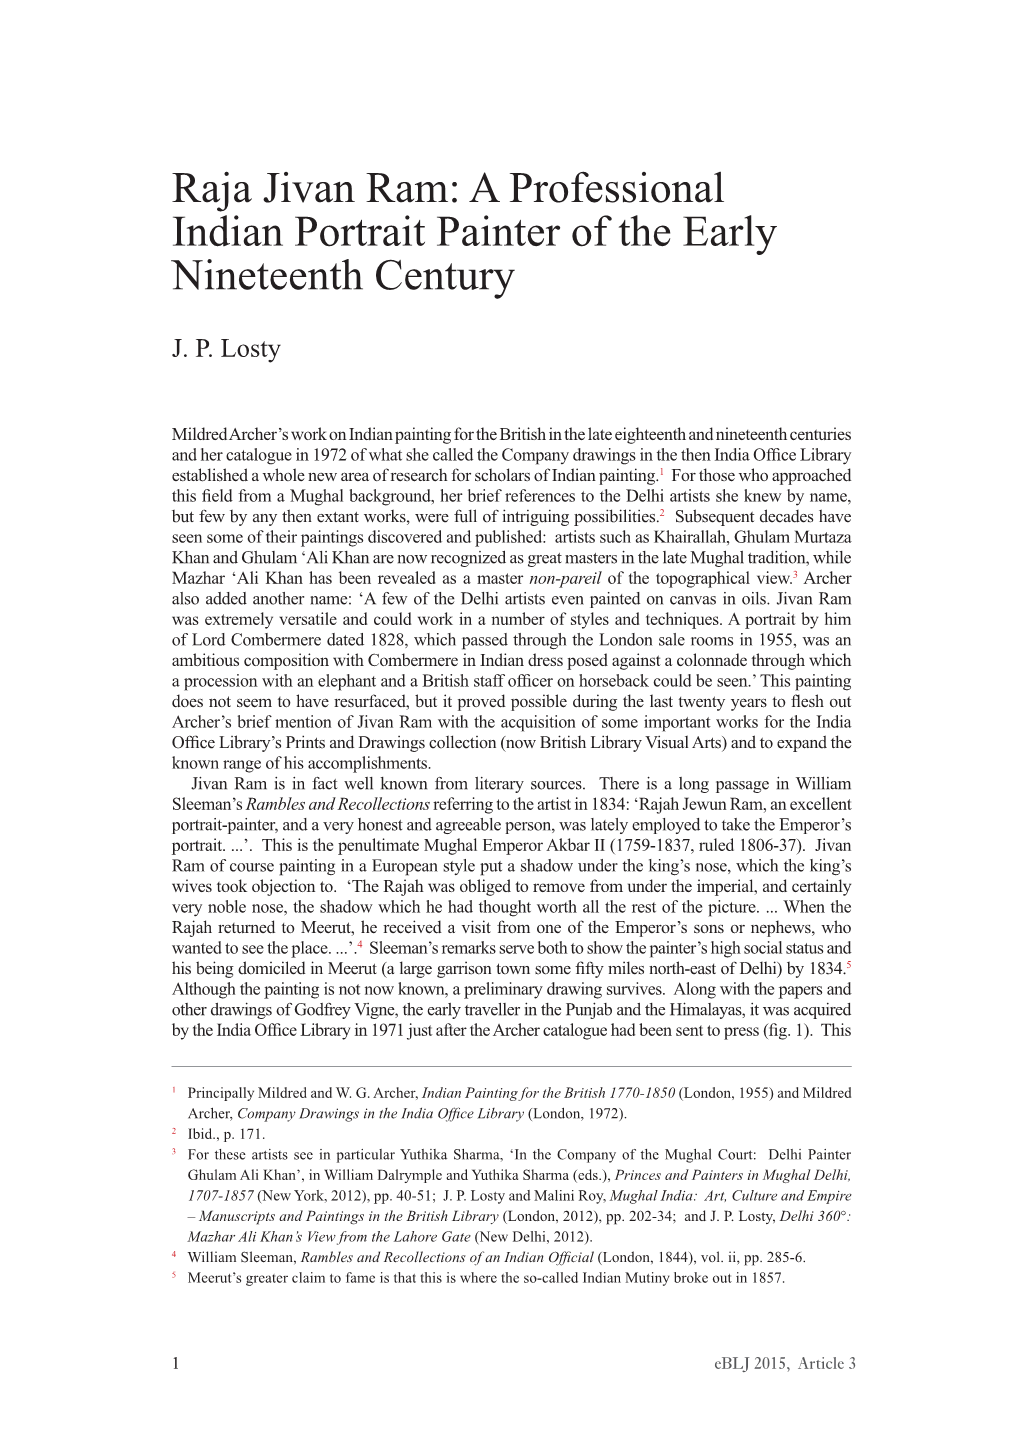 Raja Jivan Ram: a Professional Indian Portrait Painter of the Early Nineteenth Century